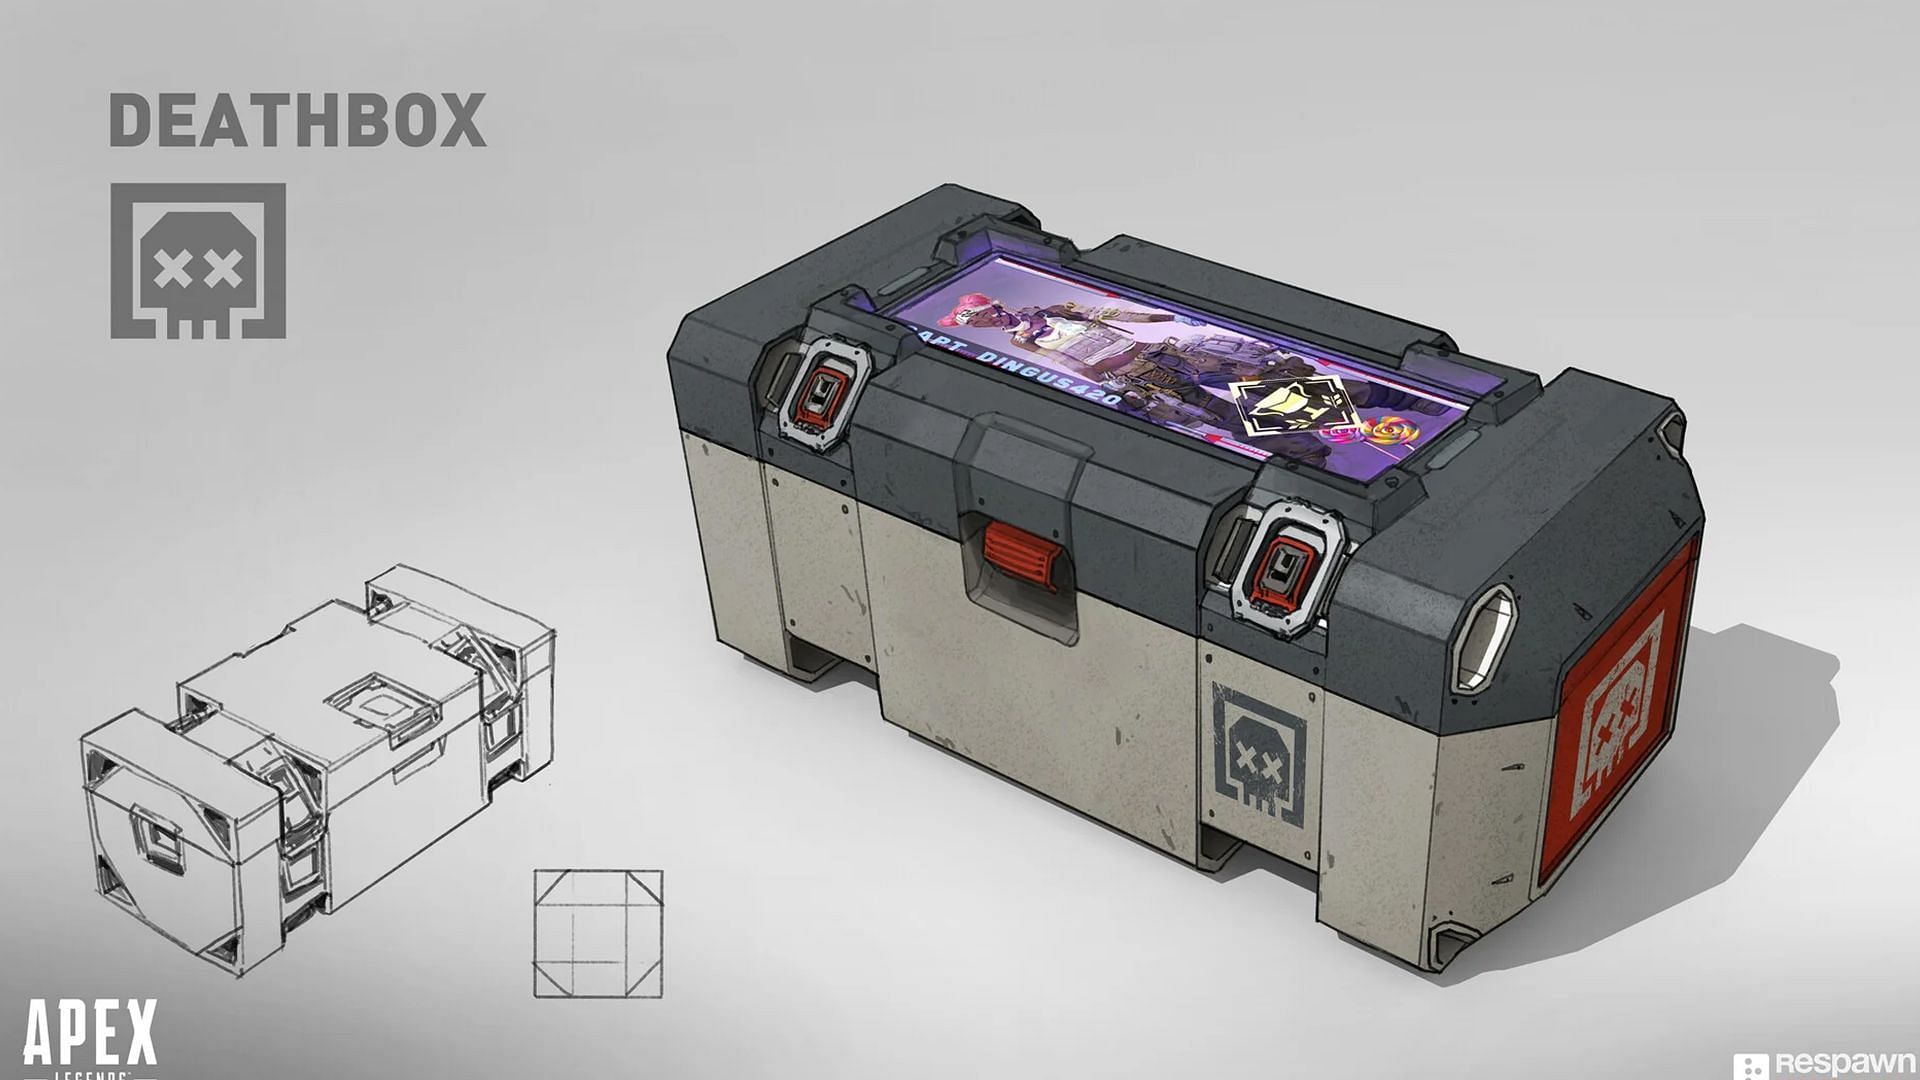 Death box in Apex Legends (Image via Electronic Arts)